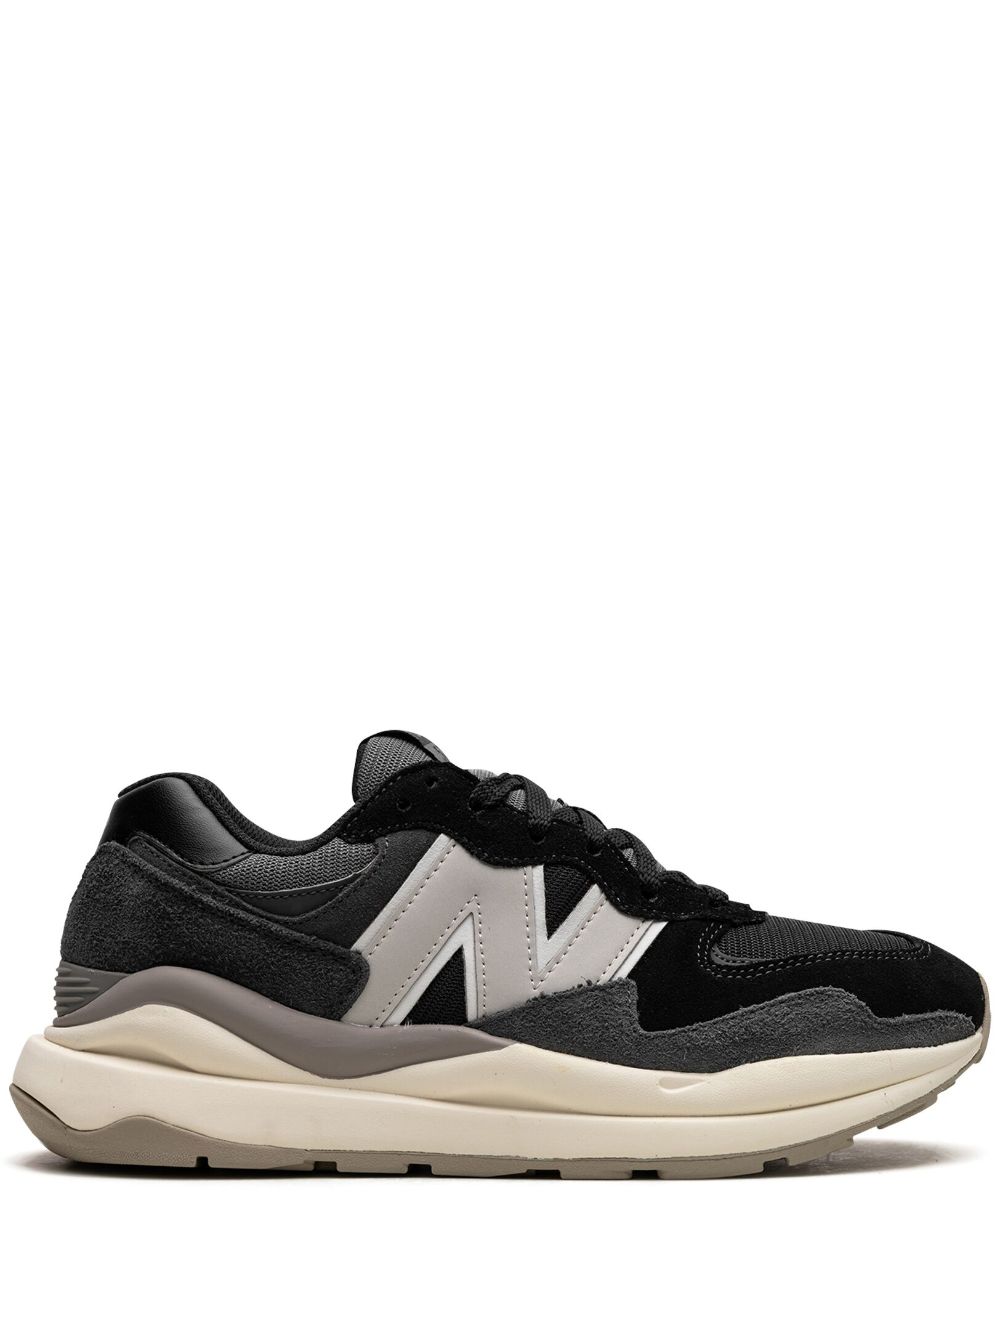 New Balance 57/40 "Black/White" sneakers